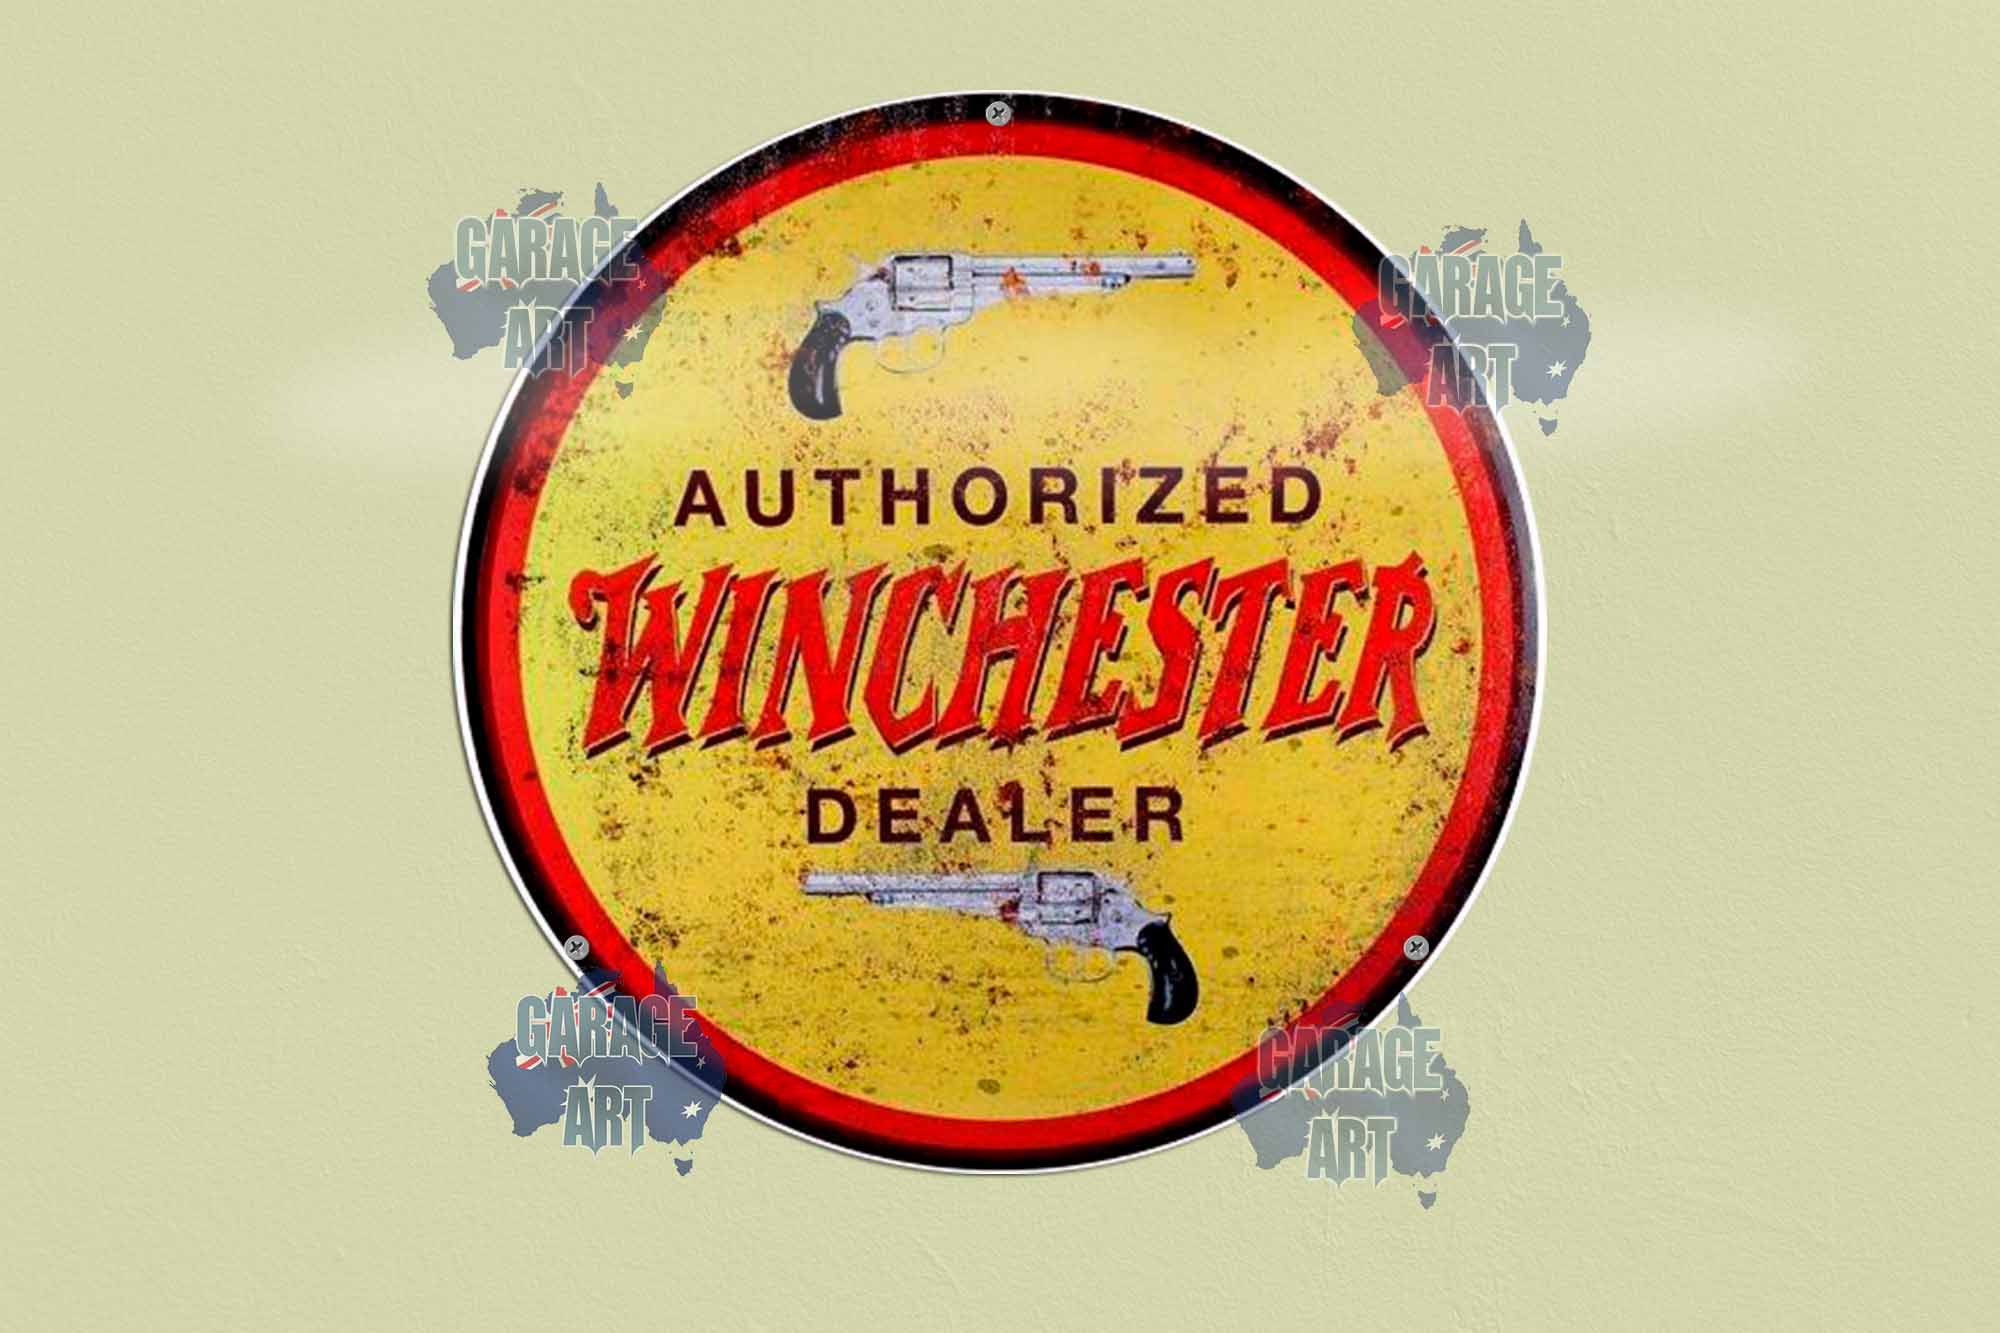 Winchester 355mmDIa Tin Sign freeshipping - garageartaustralia